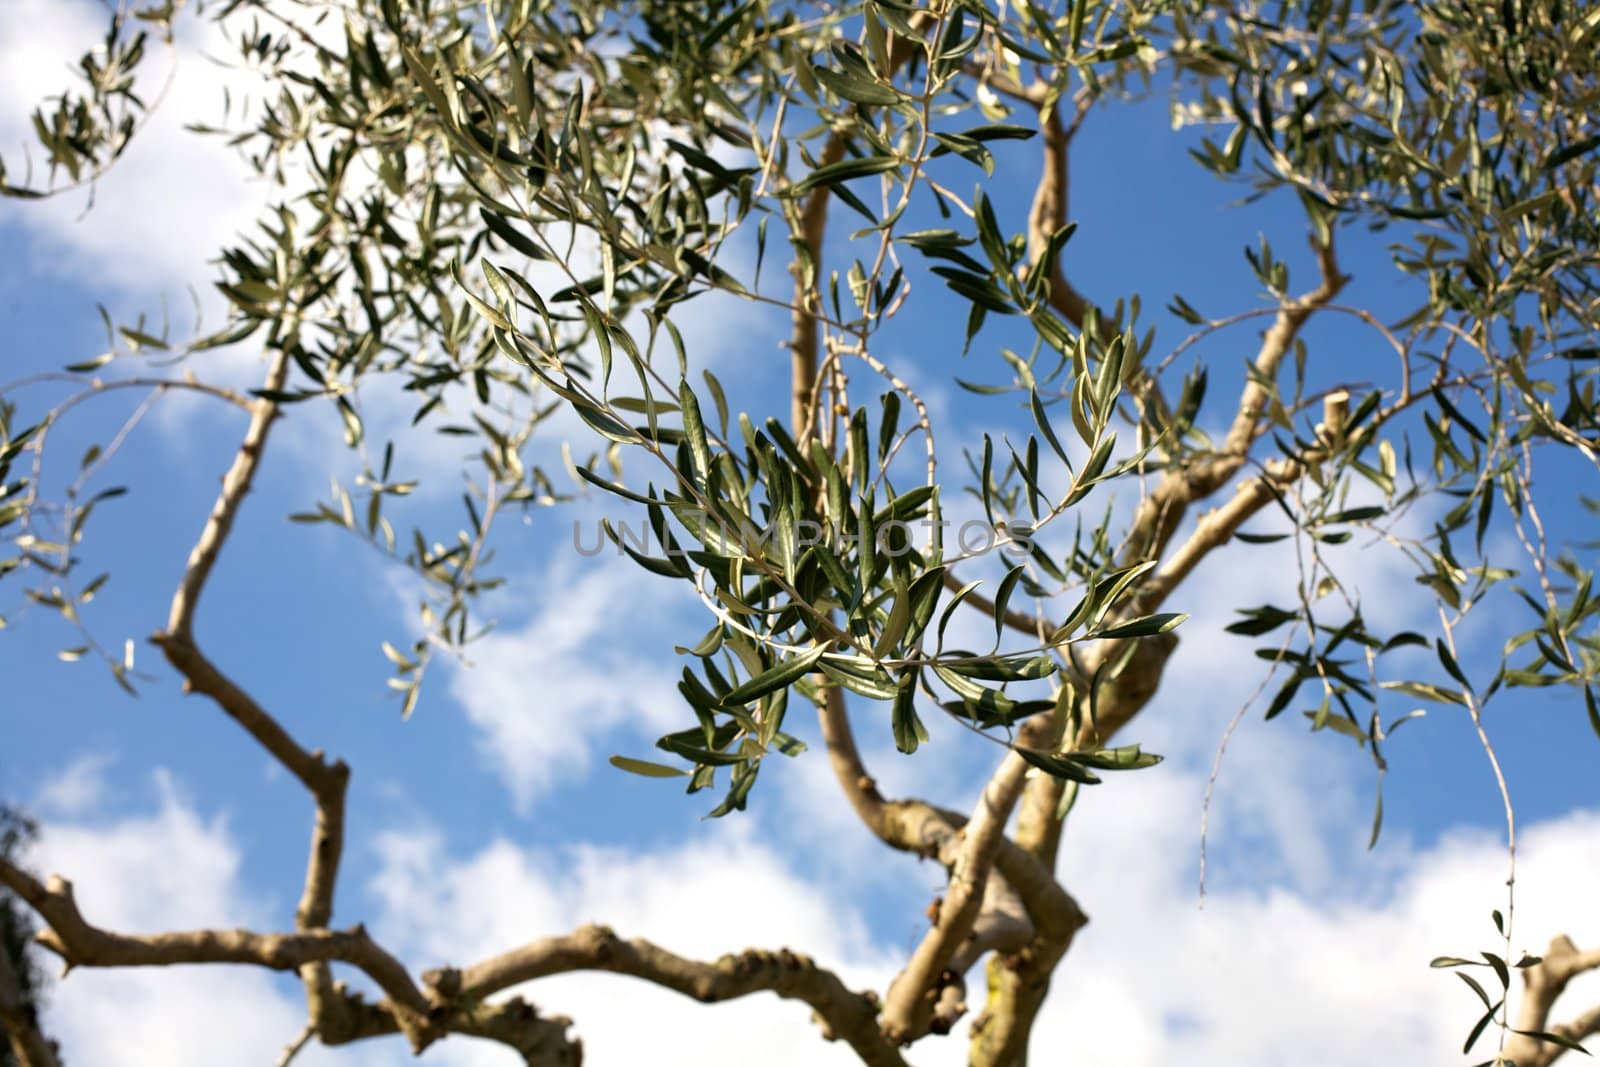 Olive tree leafs on a blue sky by fmarsicano